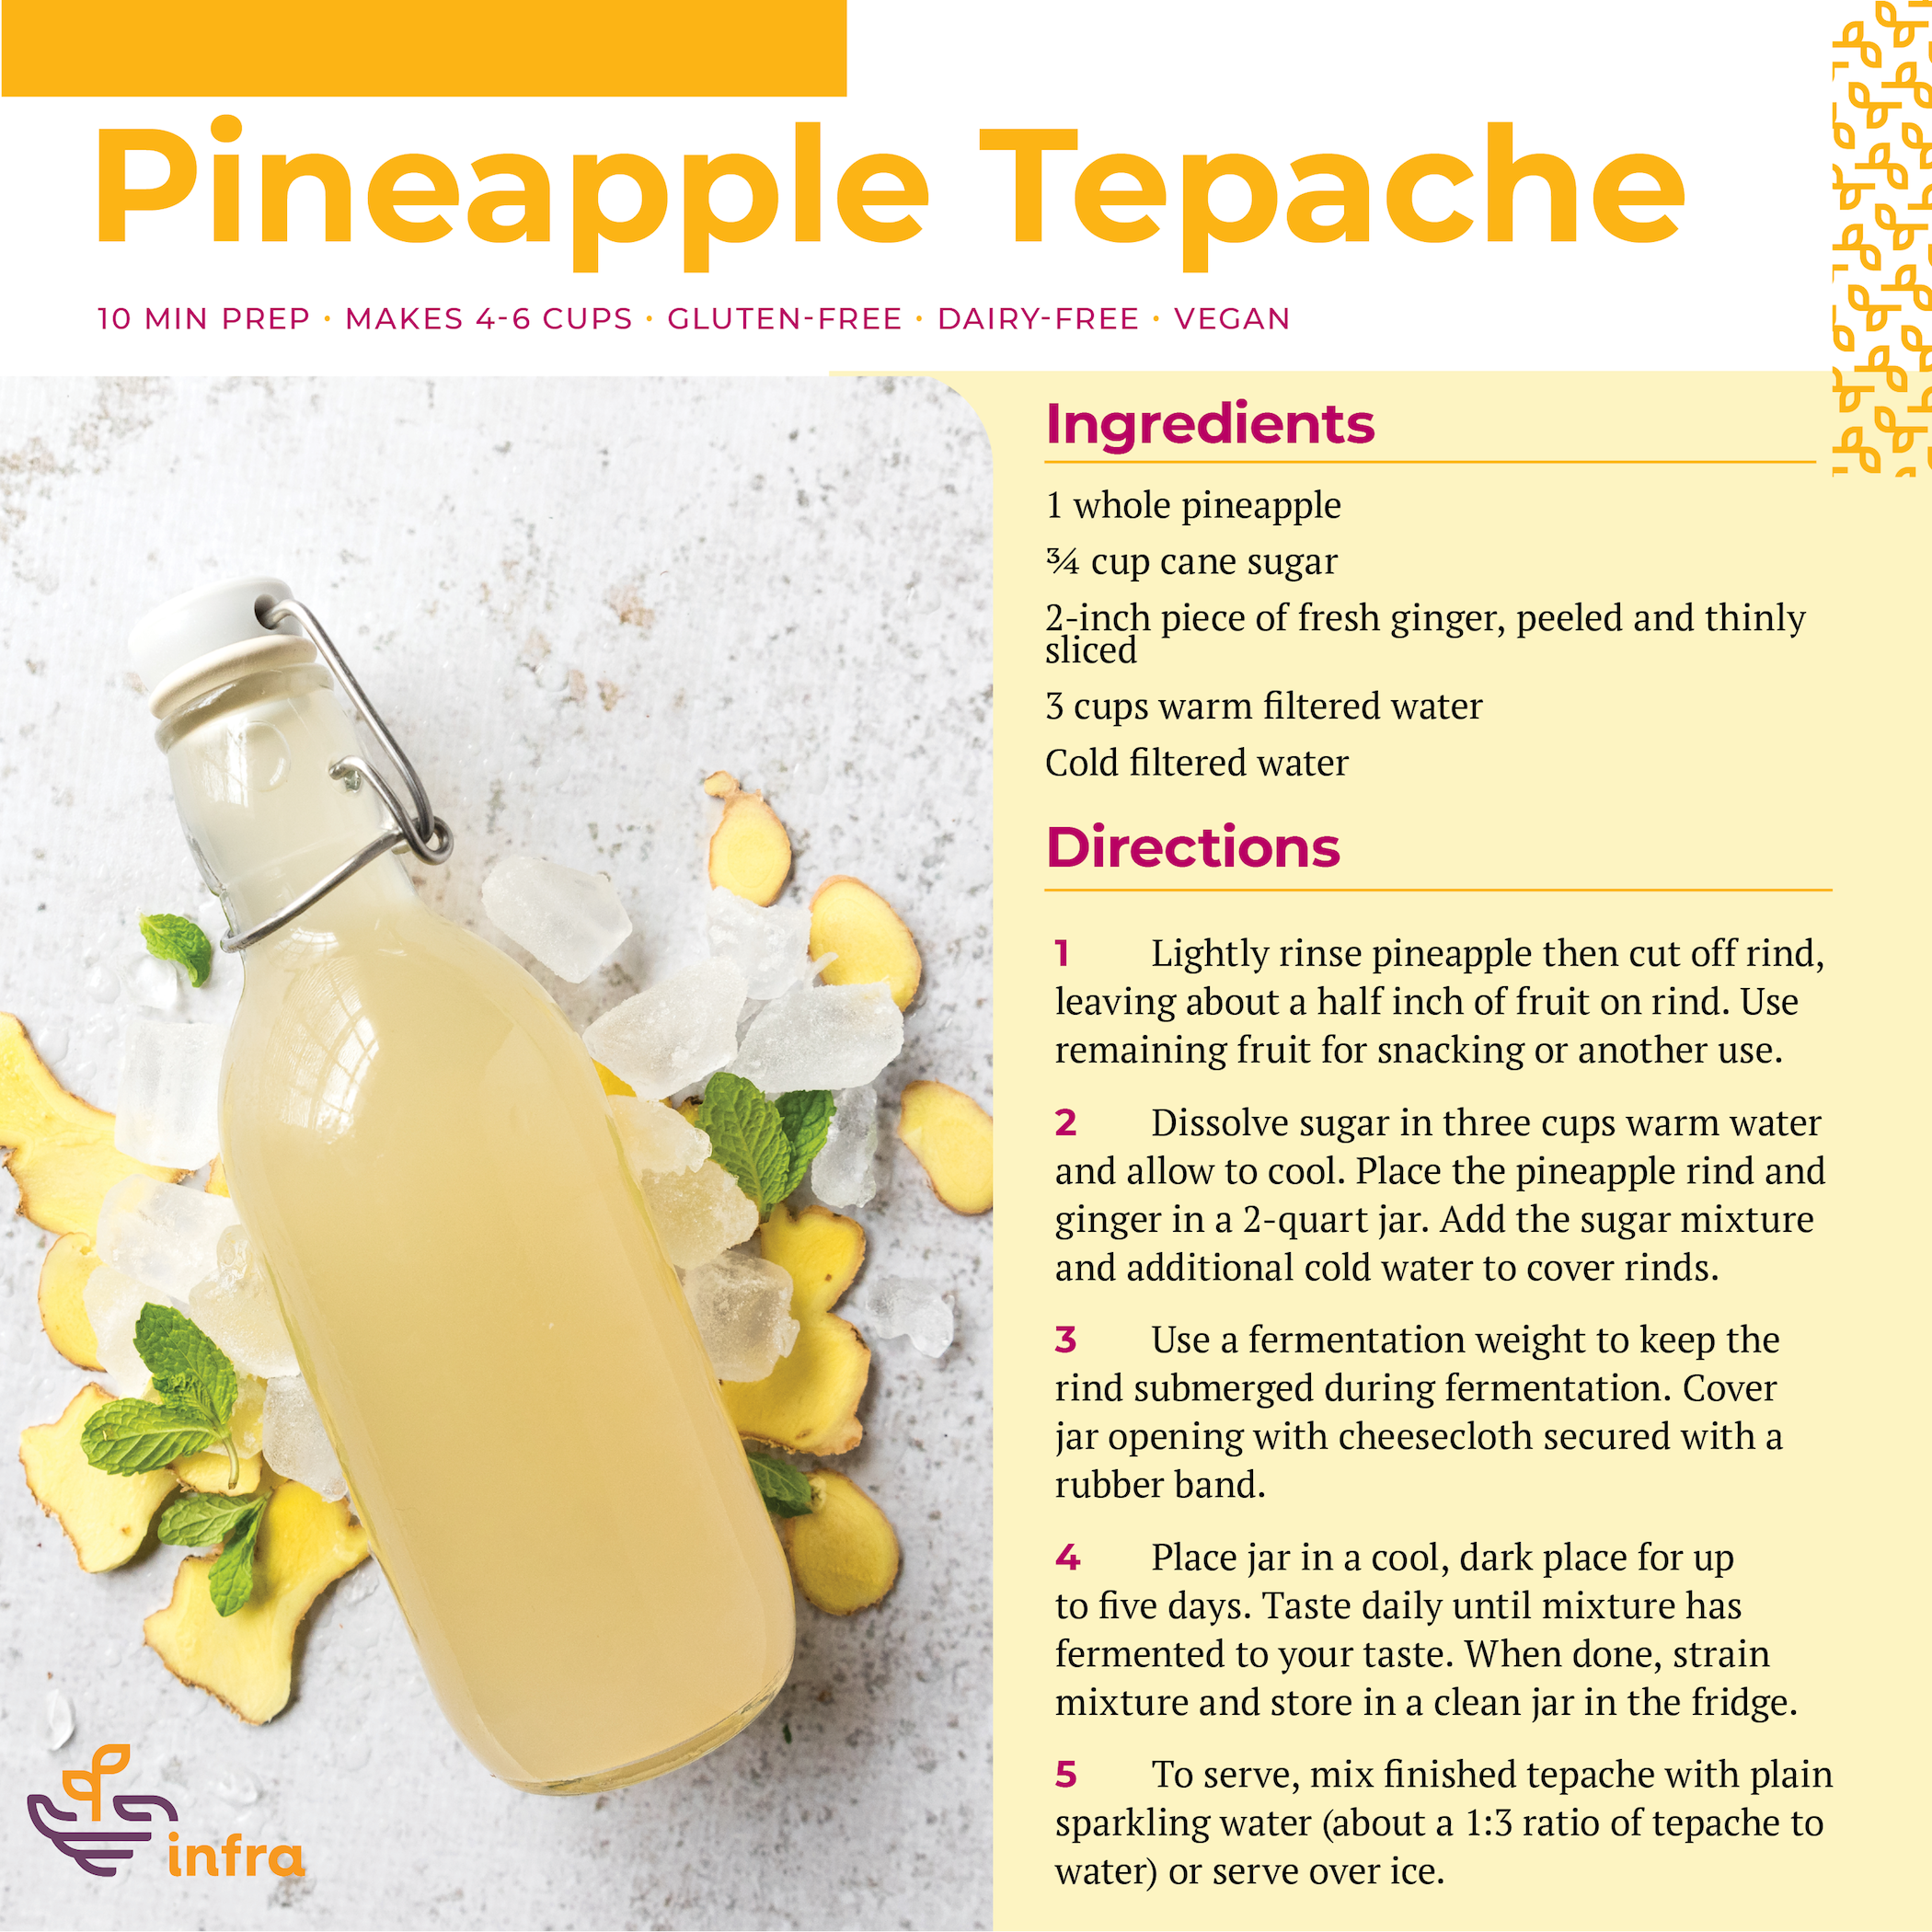 Pineapple Tepache